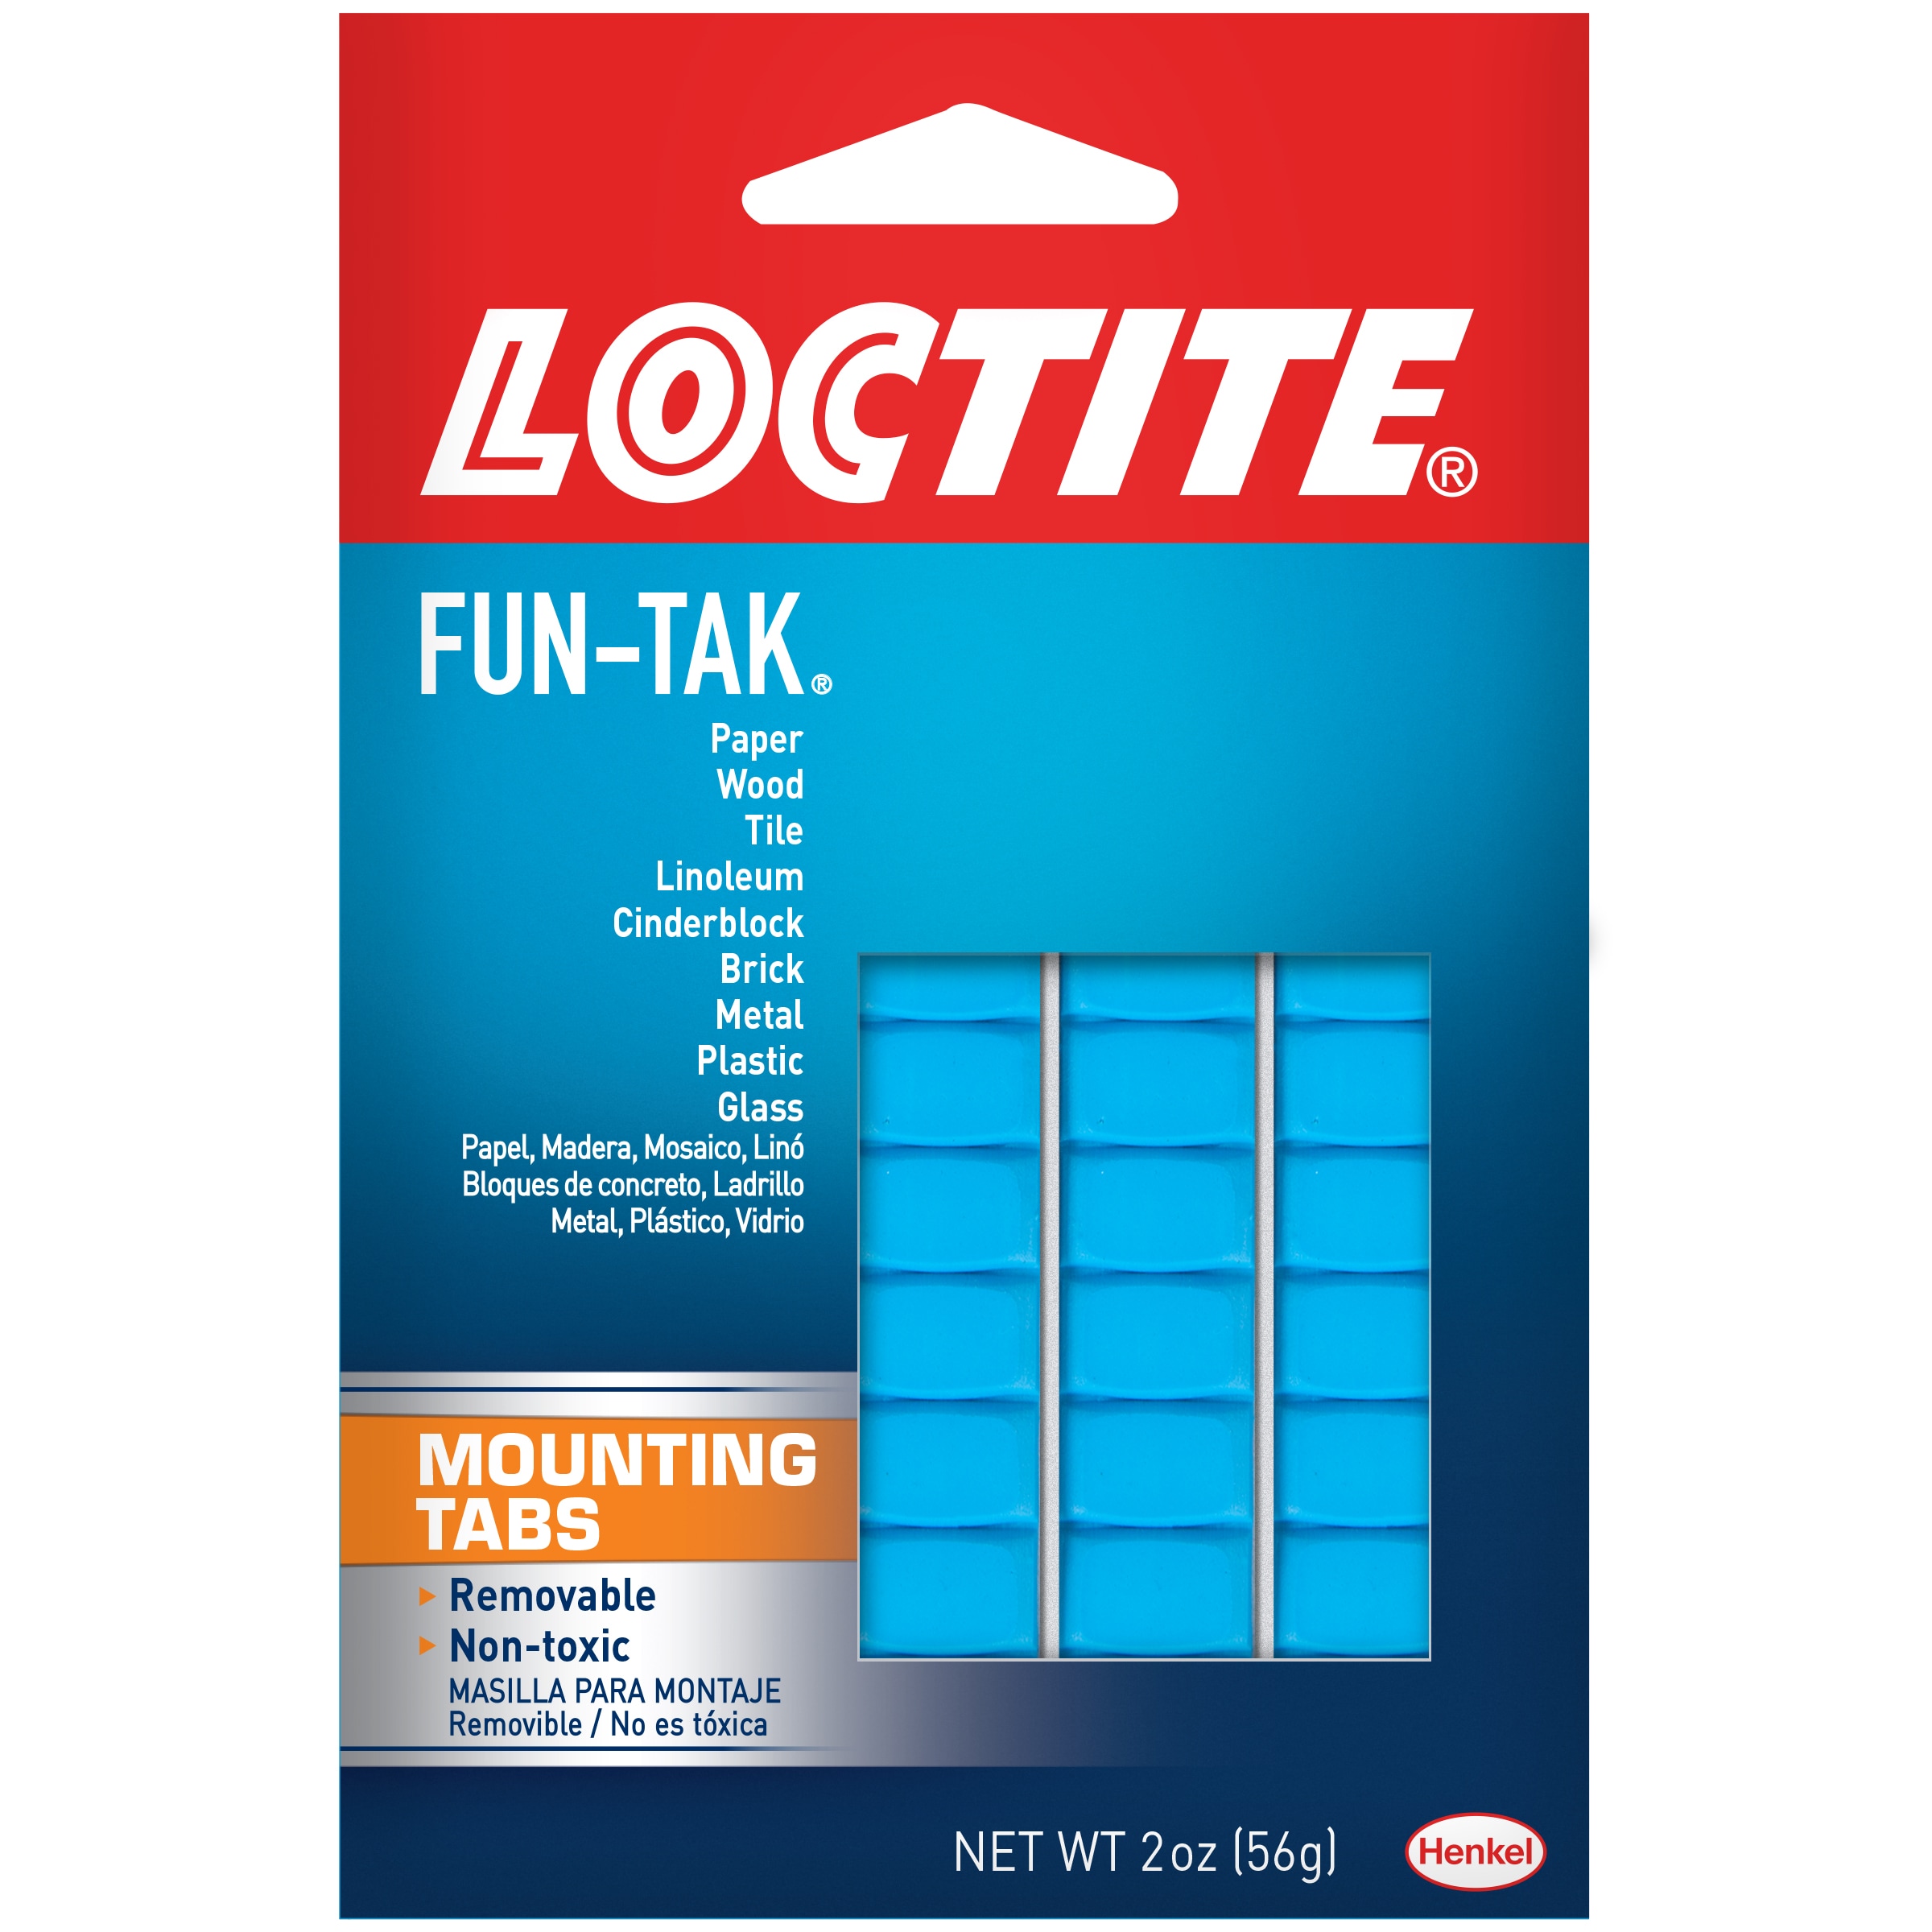 Loctite Fun-Tak 2-oz Multi-Use Specialty Adhesive | 2600205